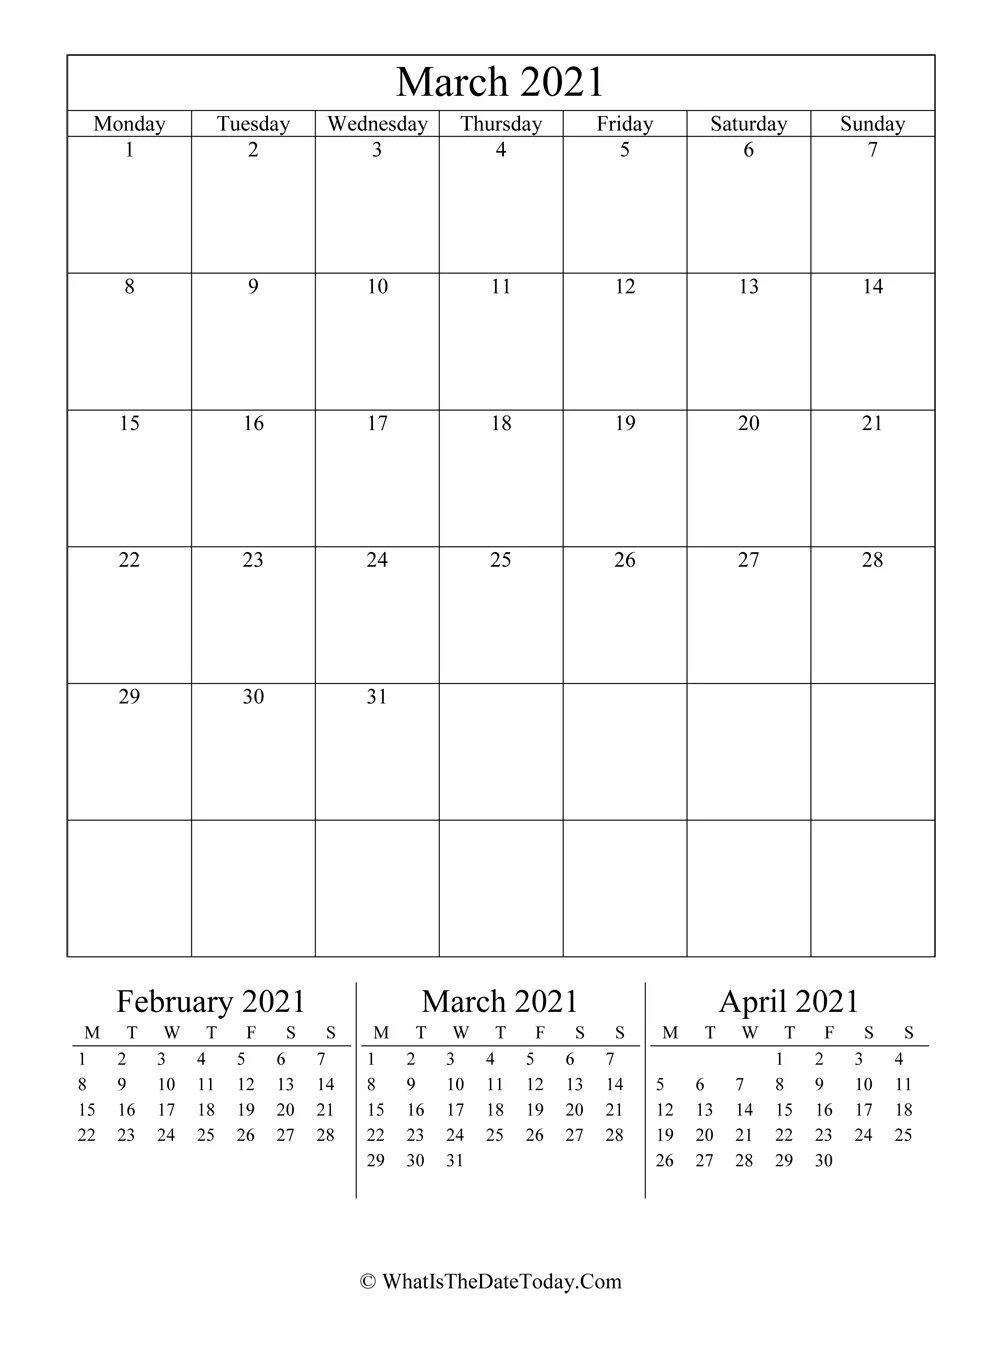 Март по дням недели календарь. Календарь январь 2022. Март 2021 календарь. Календарь февраль 2022. Календарь декабрь 2021 январь 2022.